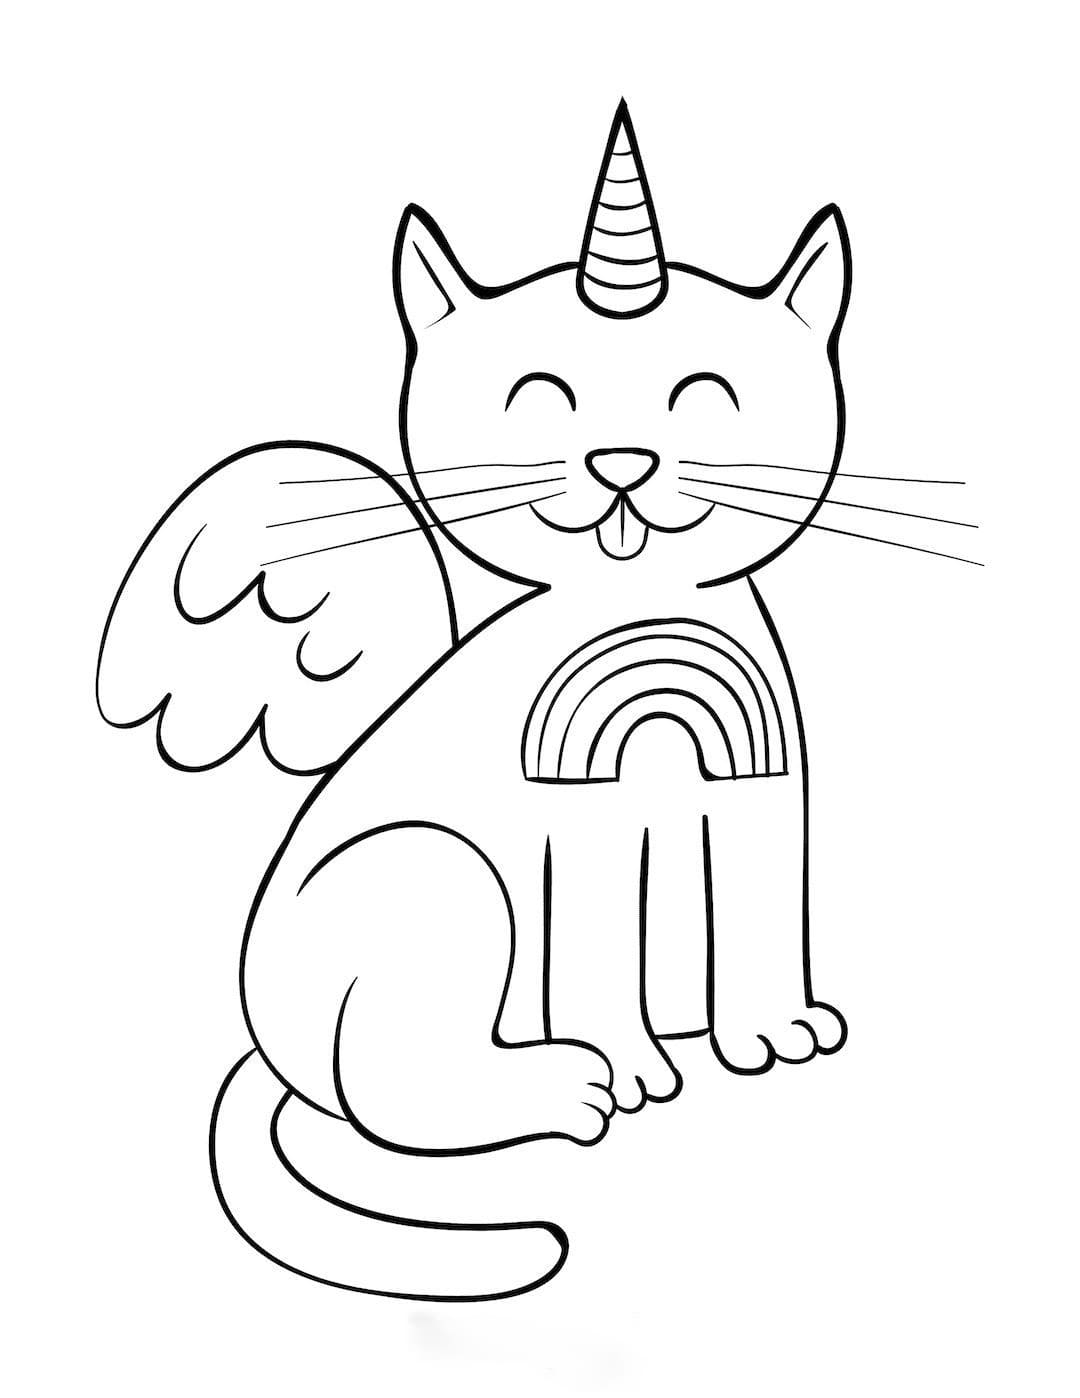 Coloring page Unicorn Cat happy pet